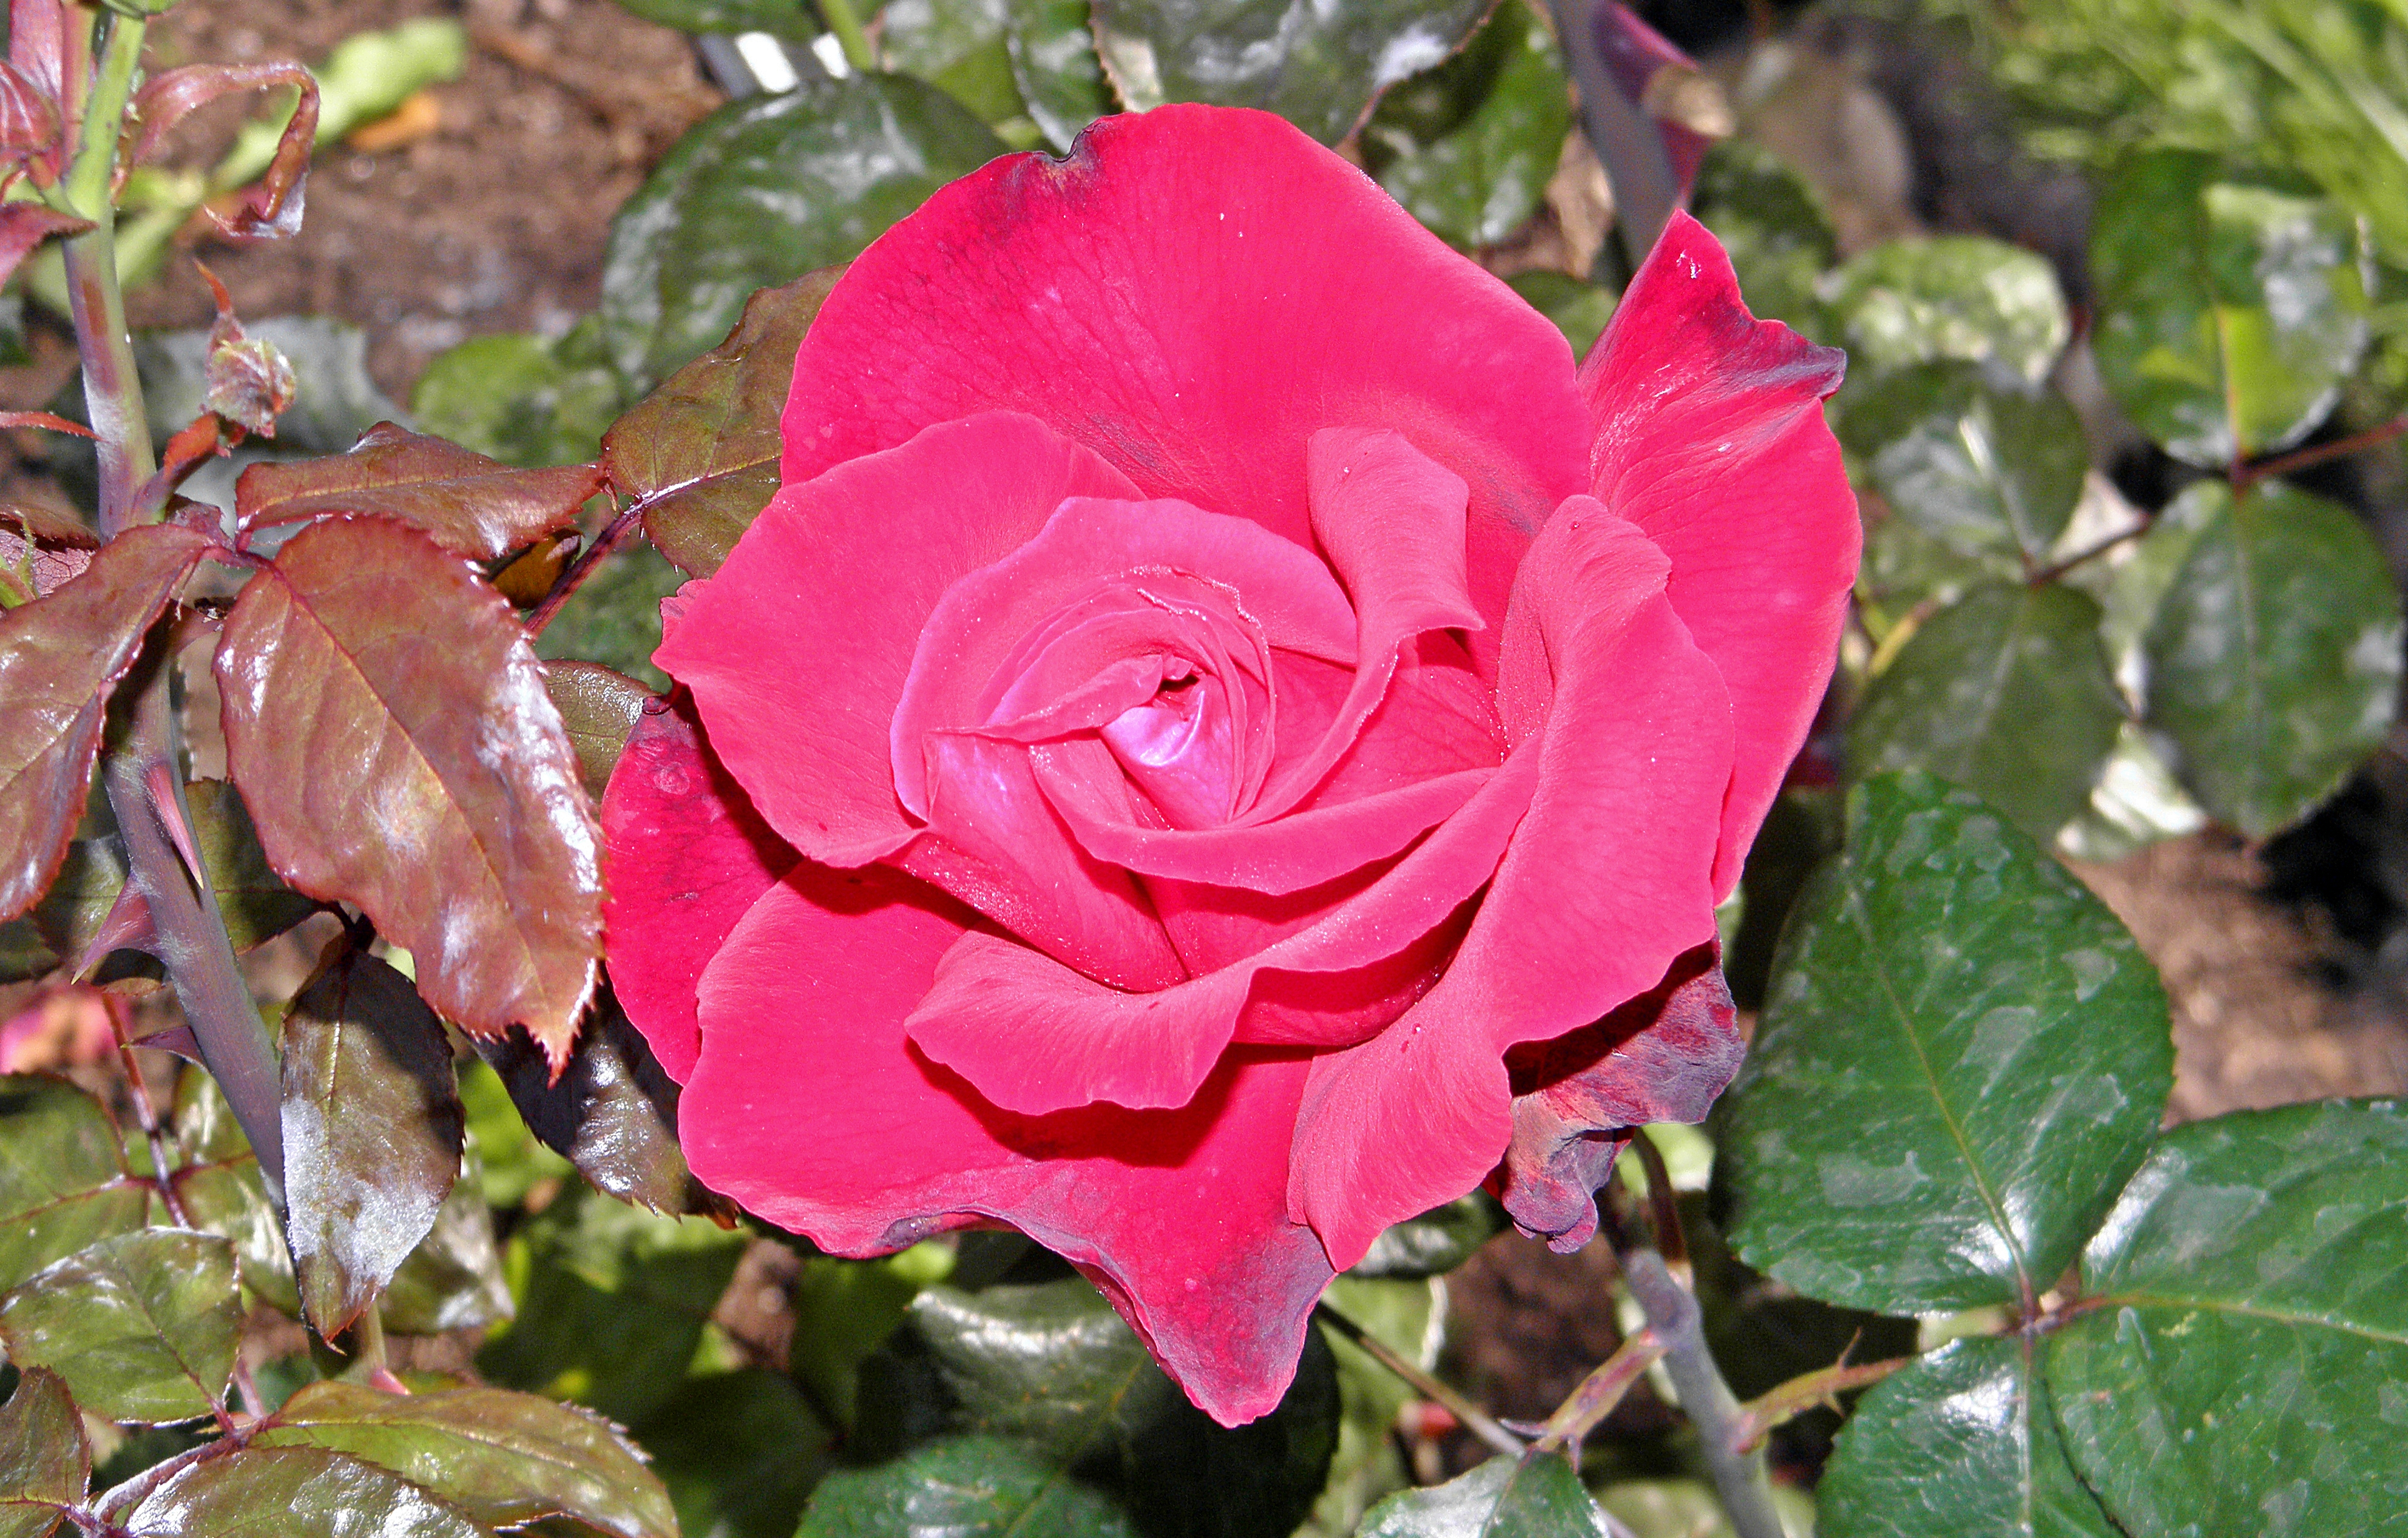 polonaise rose